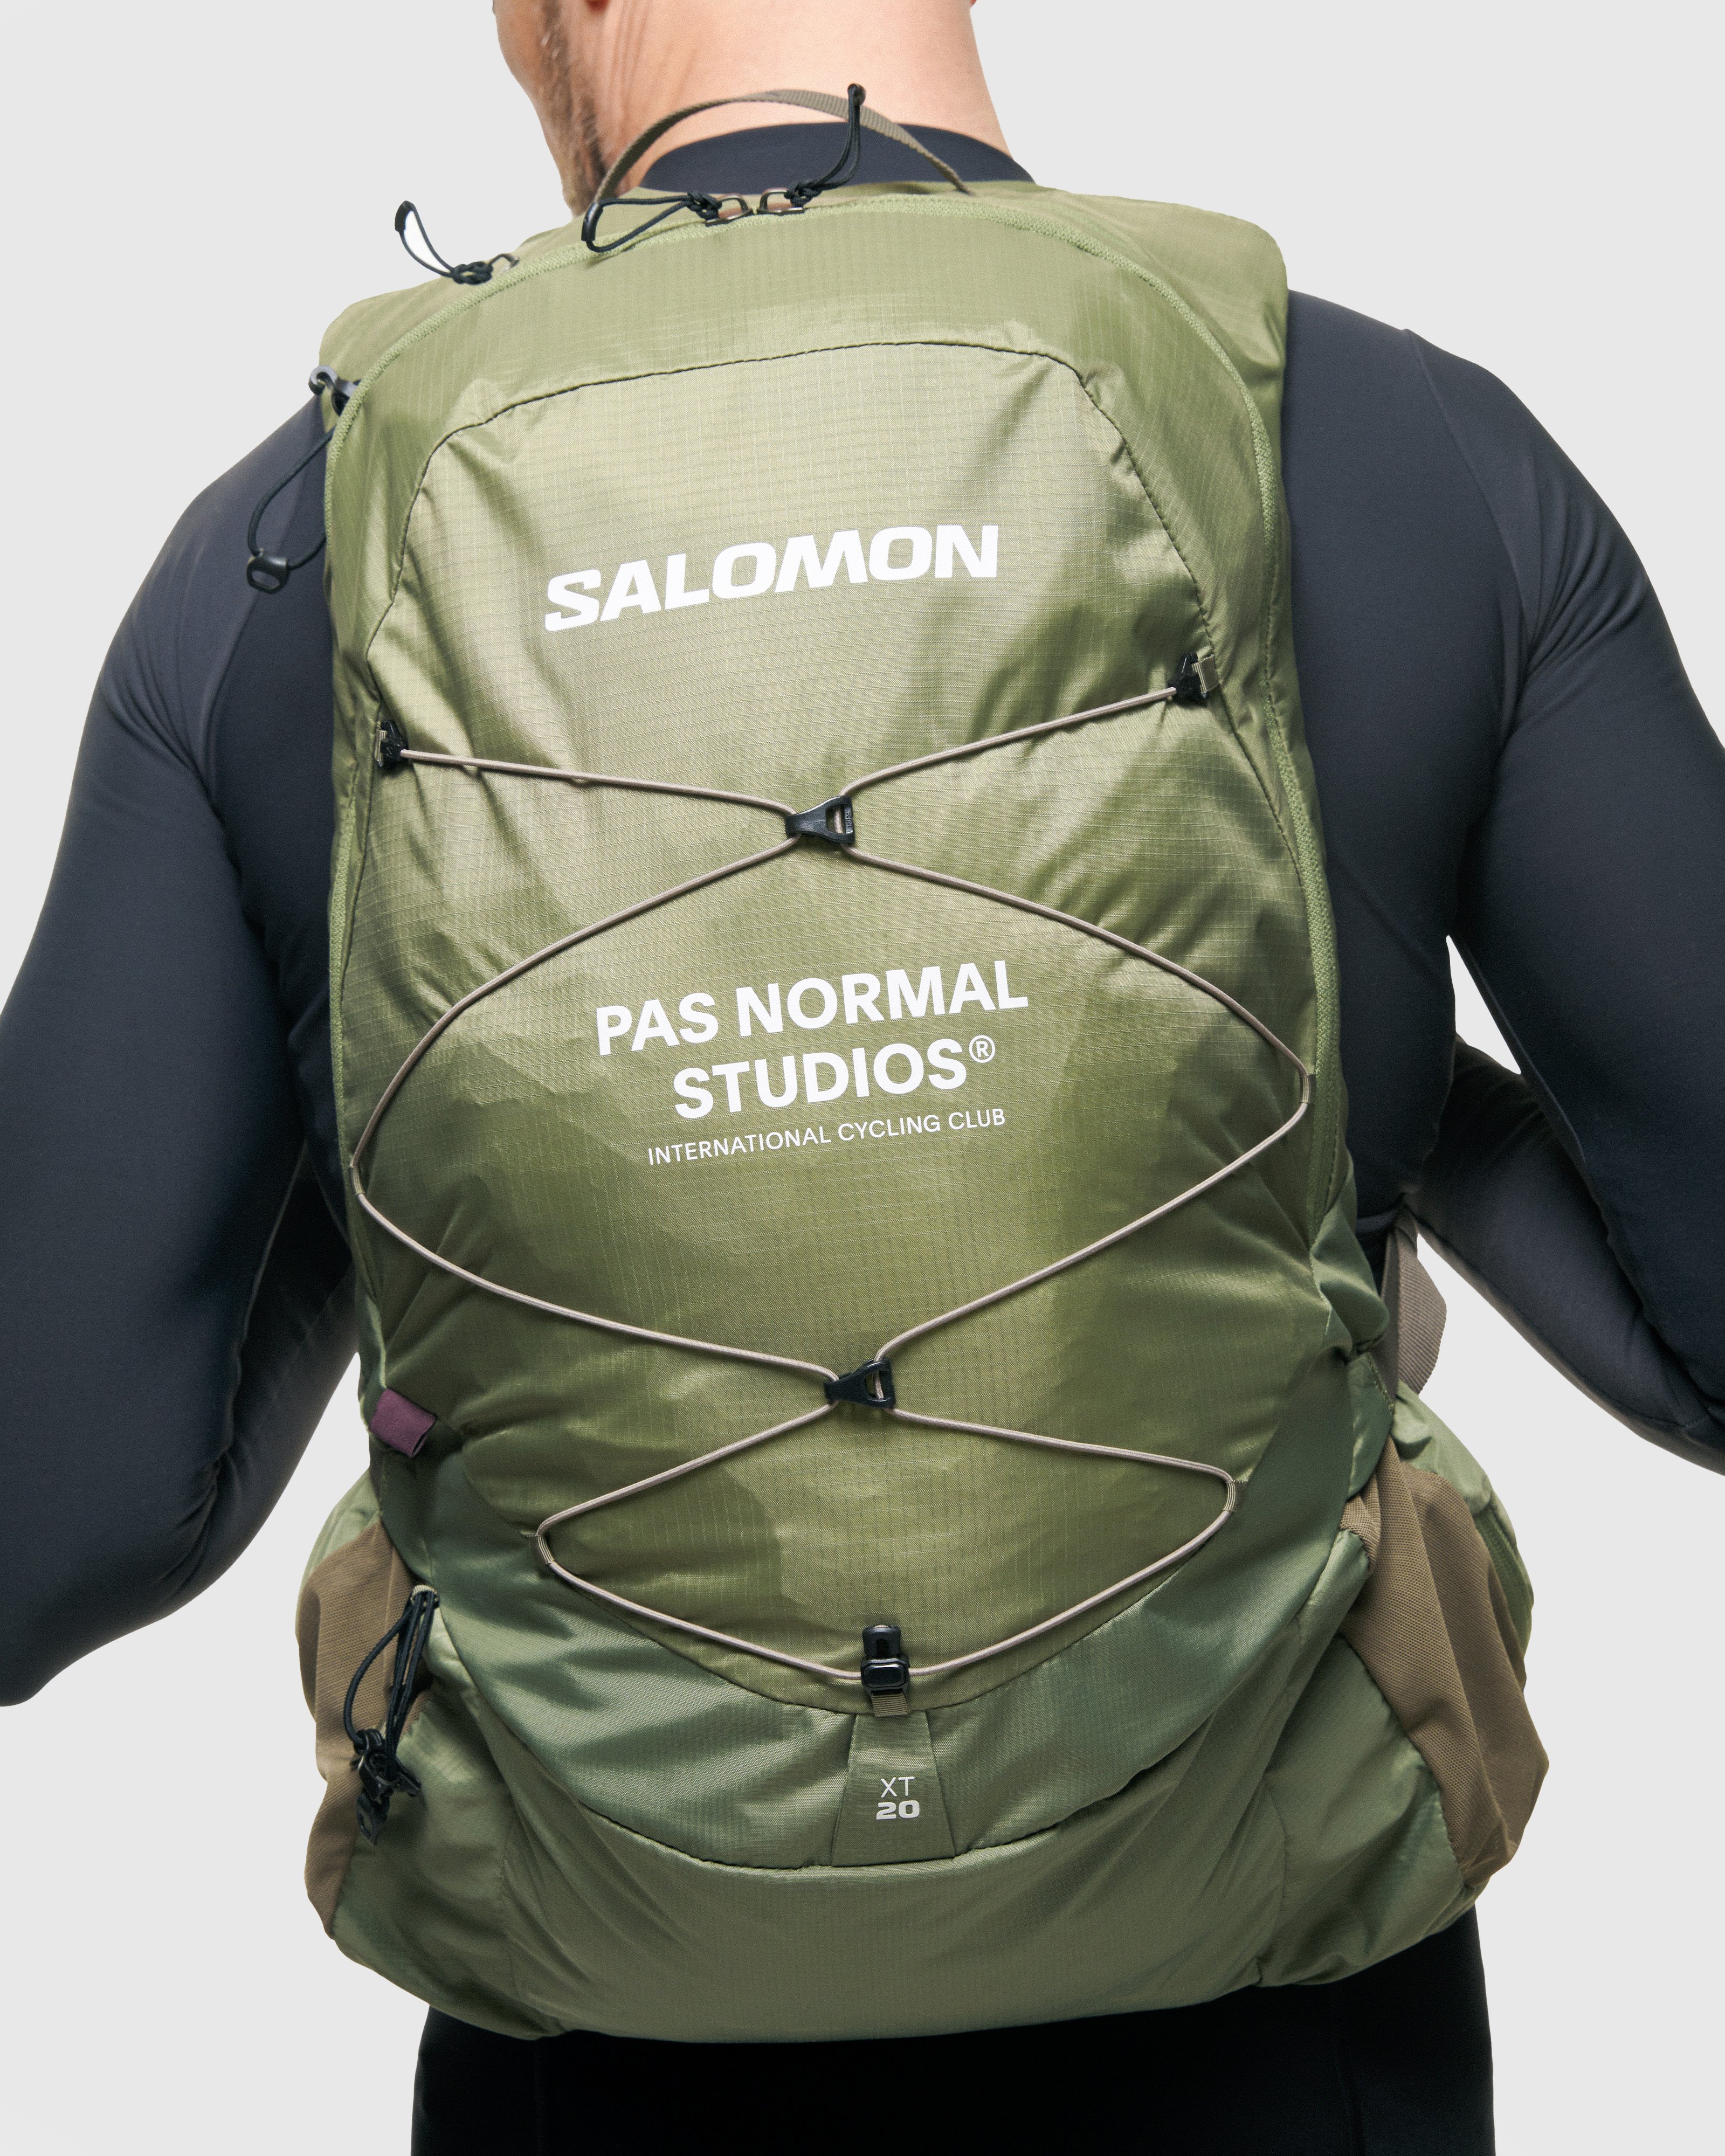 Salomon x PAS NORMAL STUDIOS - XT 20 Bag - Accessories - Green - Image 9